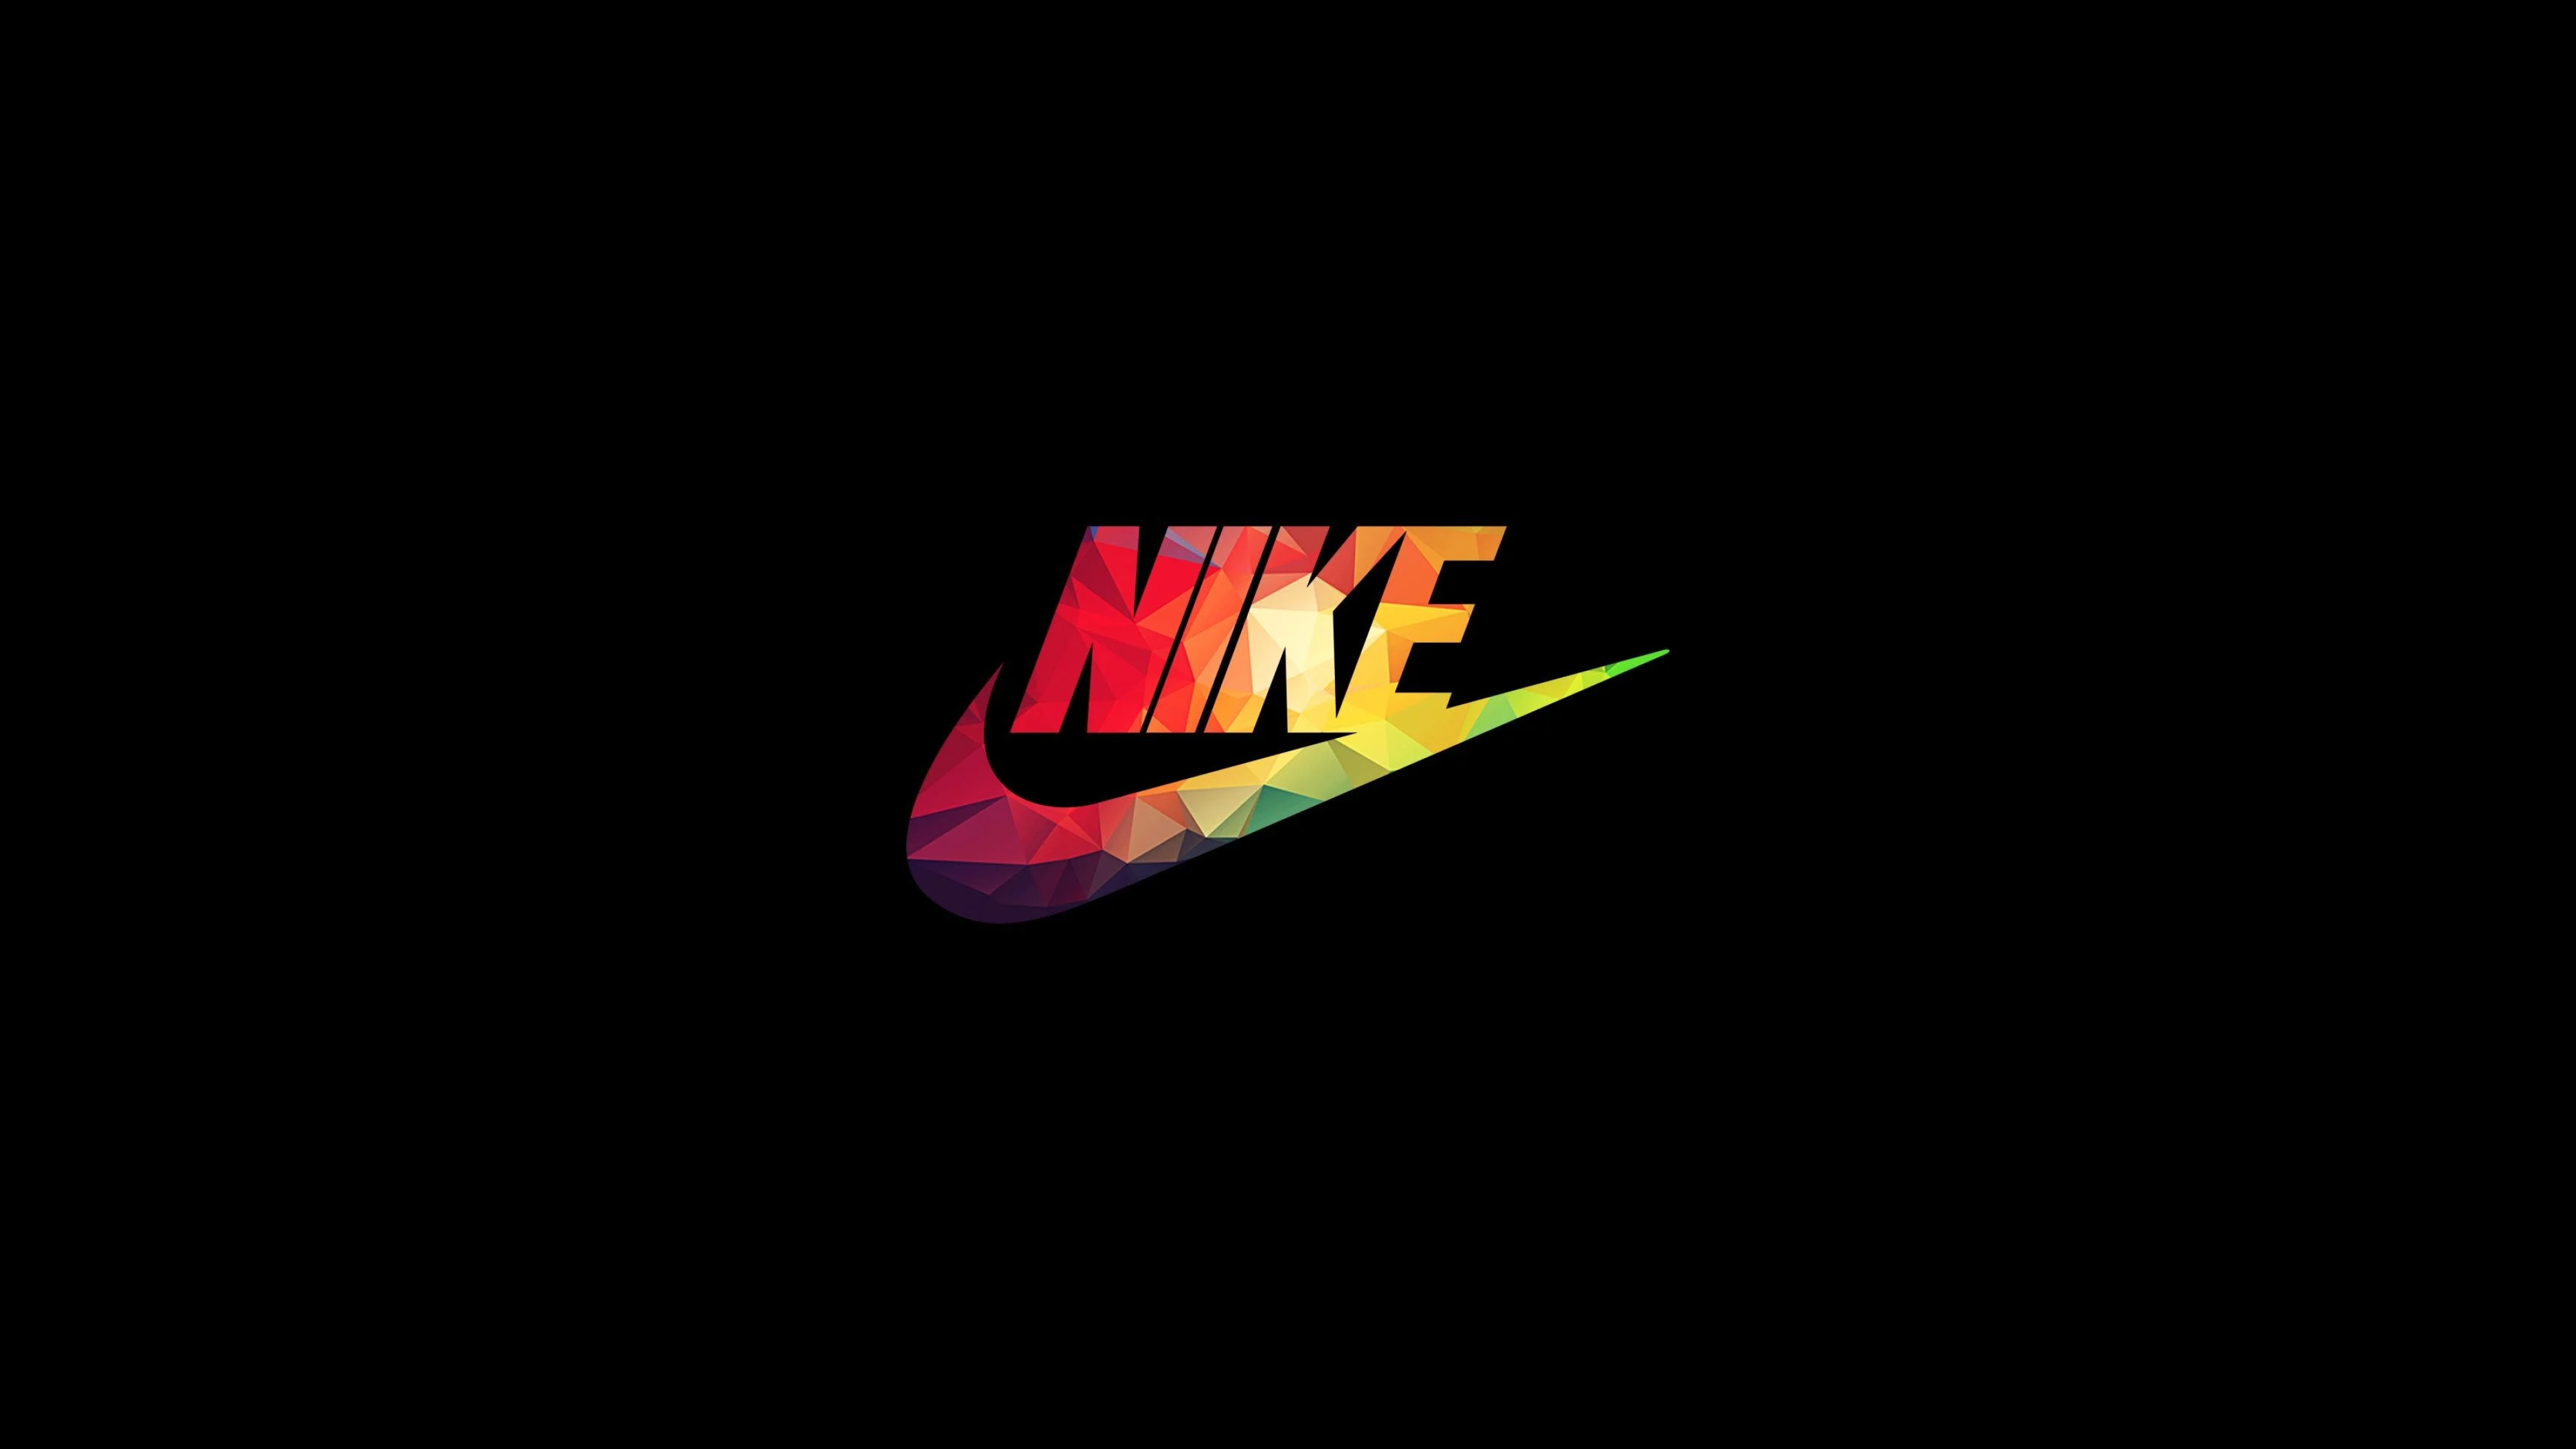 3840x2160 4K Nike Wallpapers Top Free 4K Nike Backgrounds